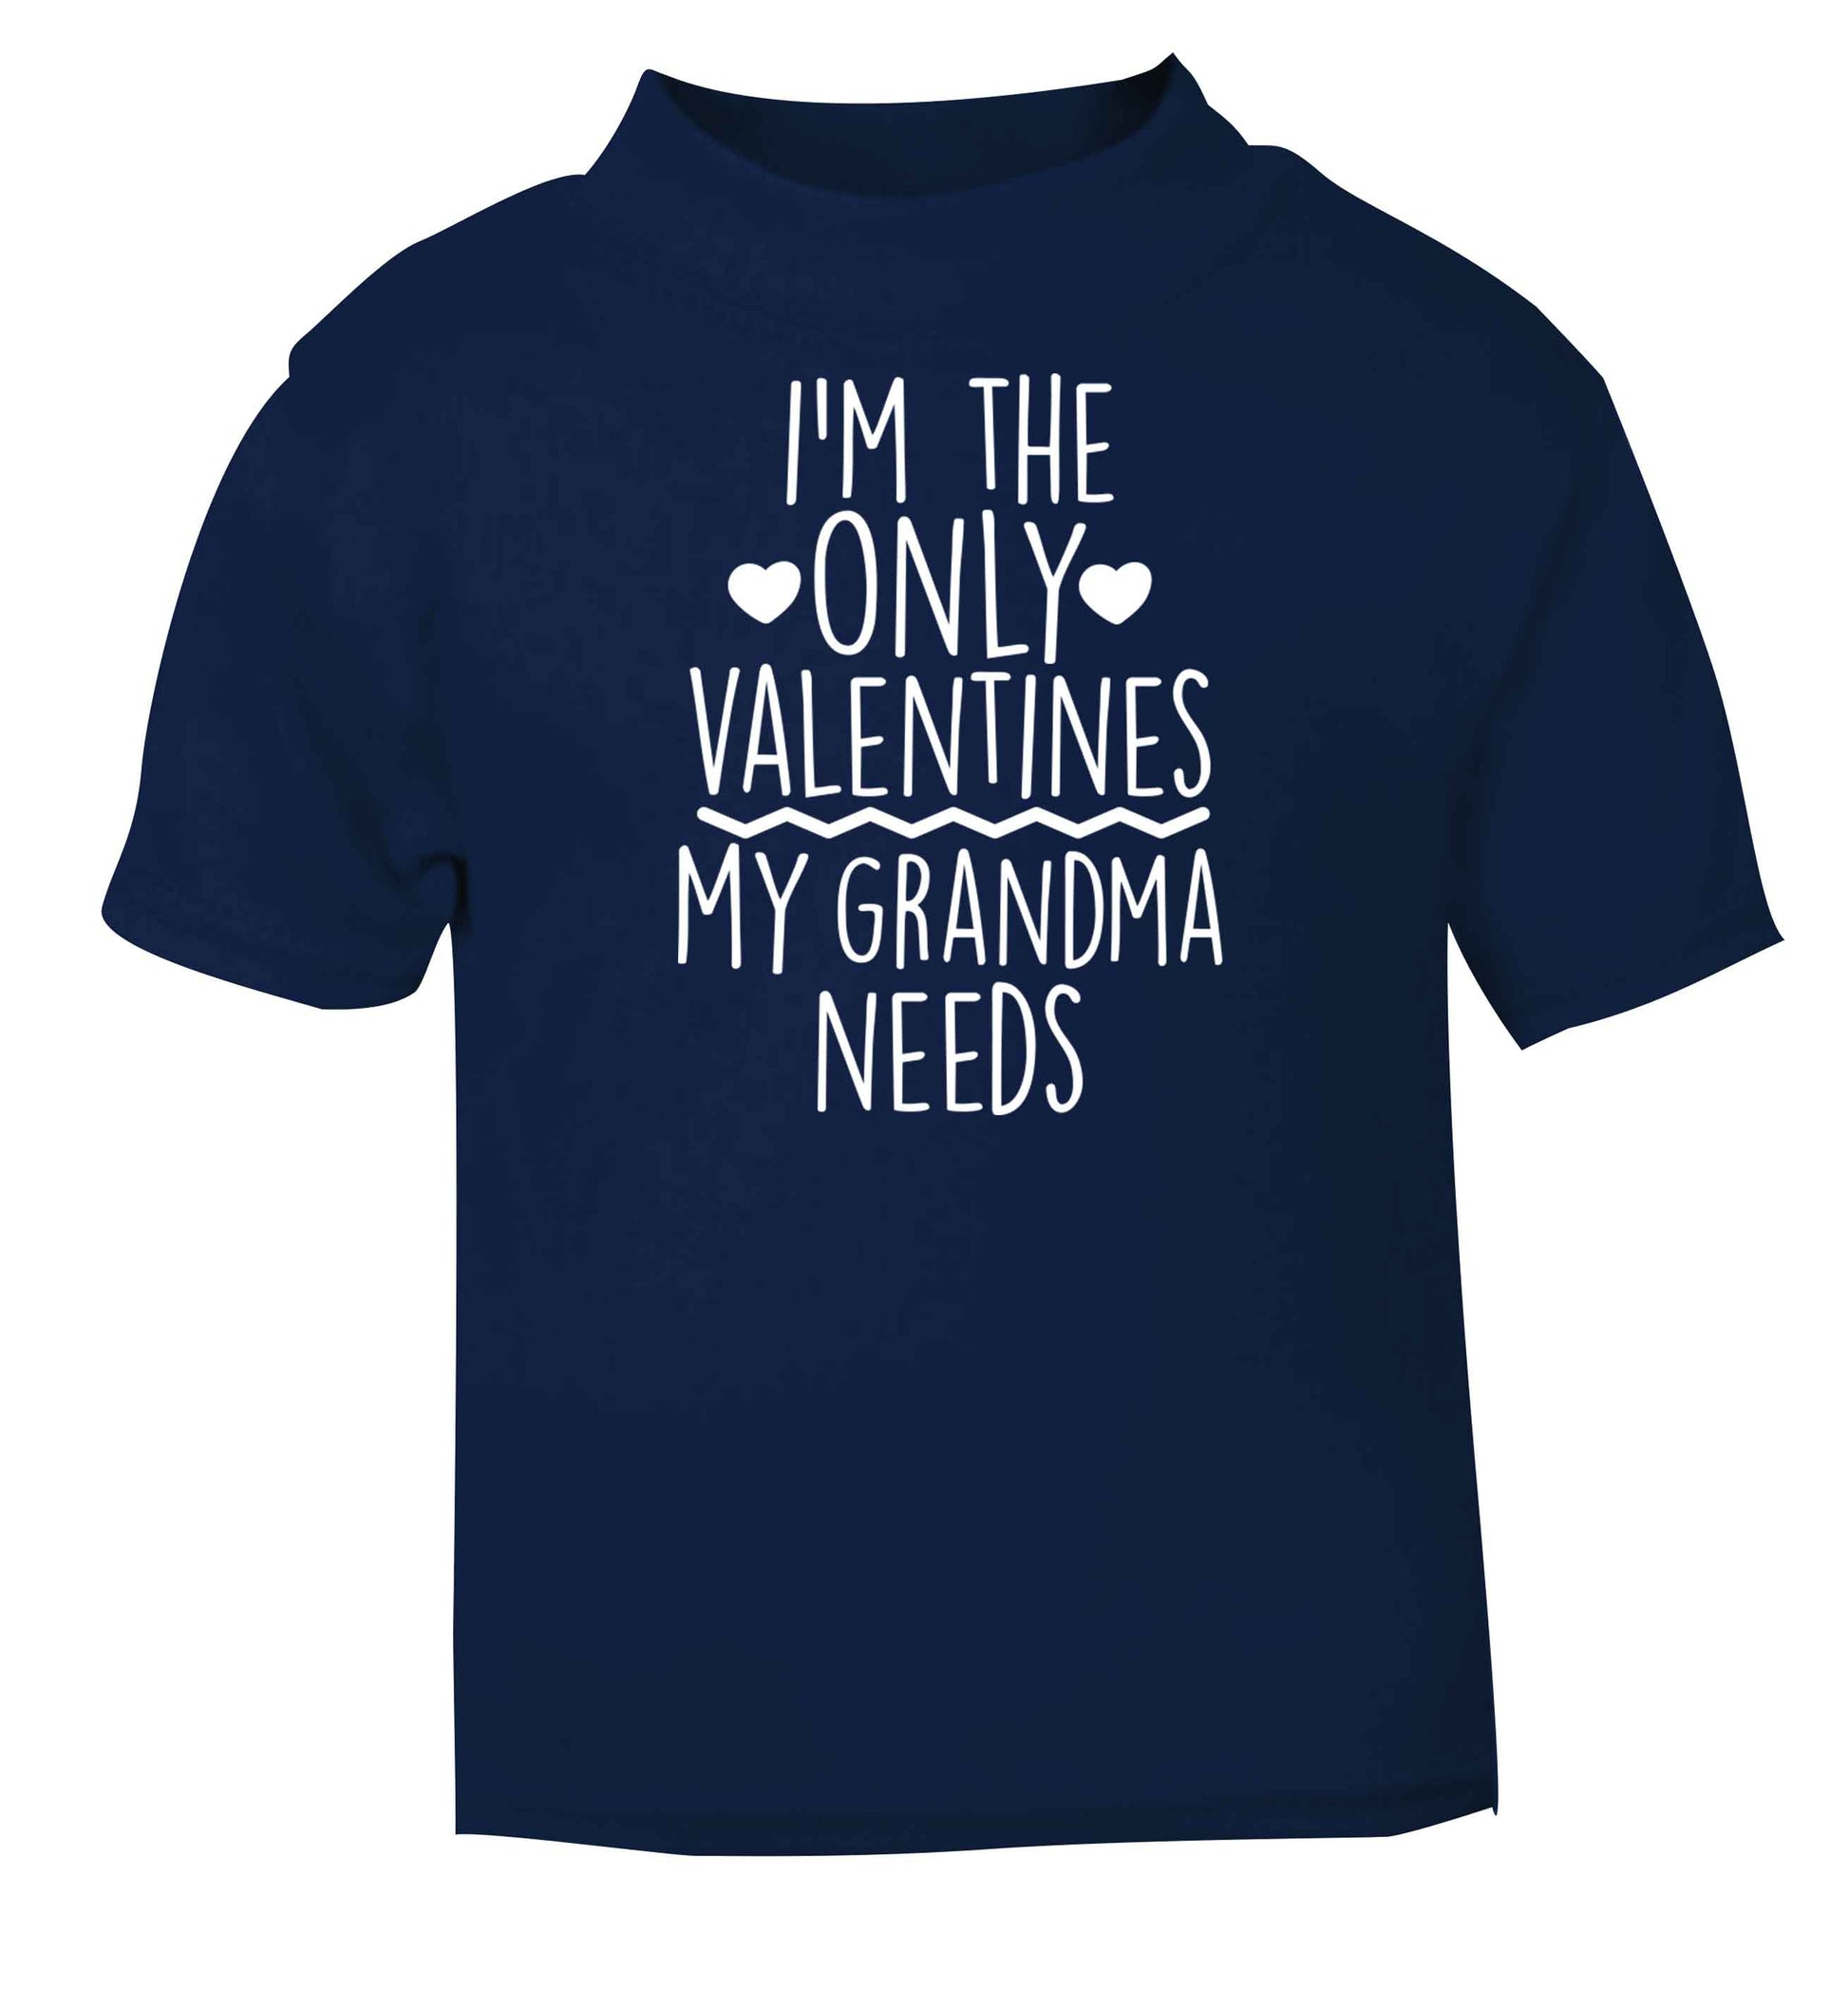 I'm the only valentines my grandma needs navy baby toddler Tshirt 2 Years